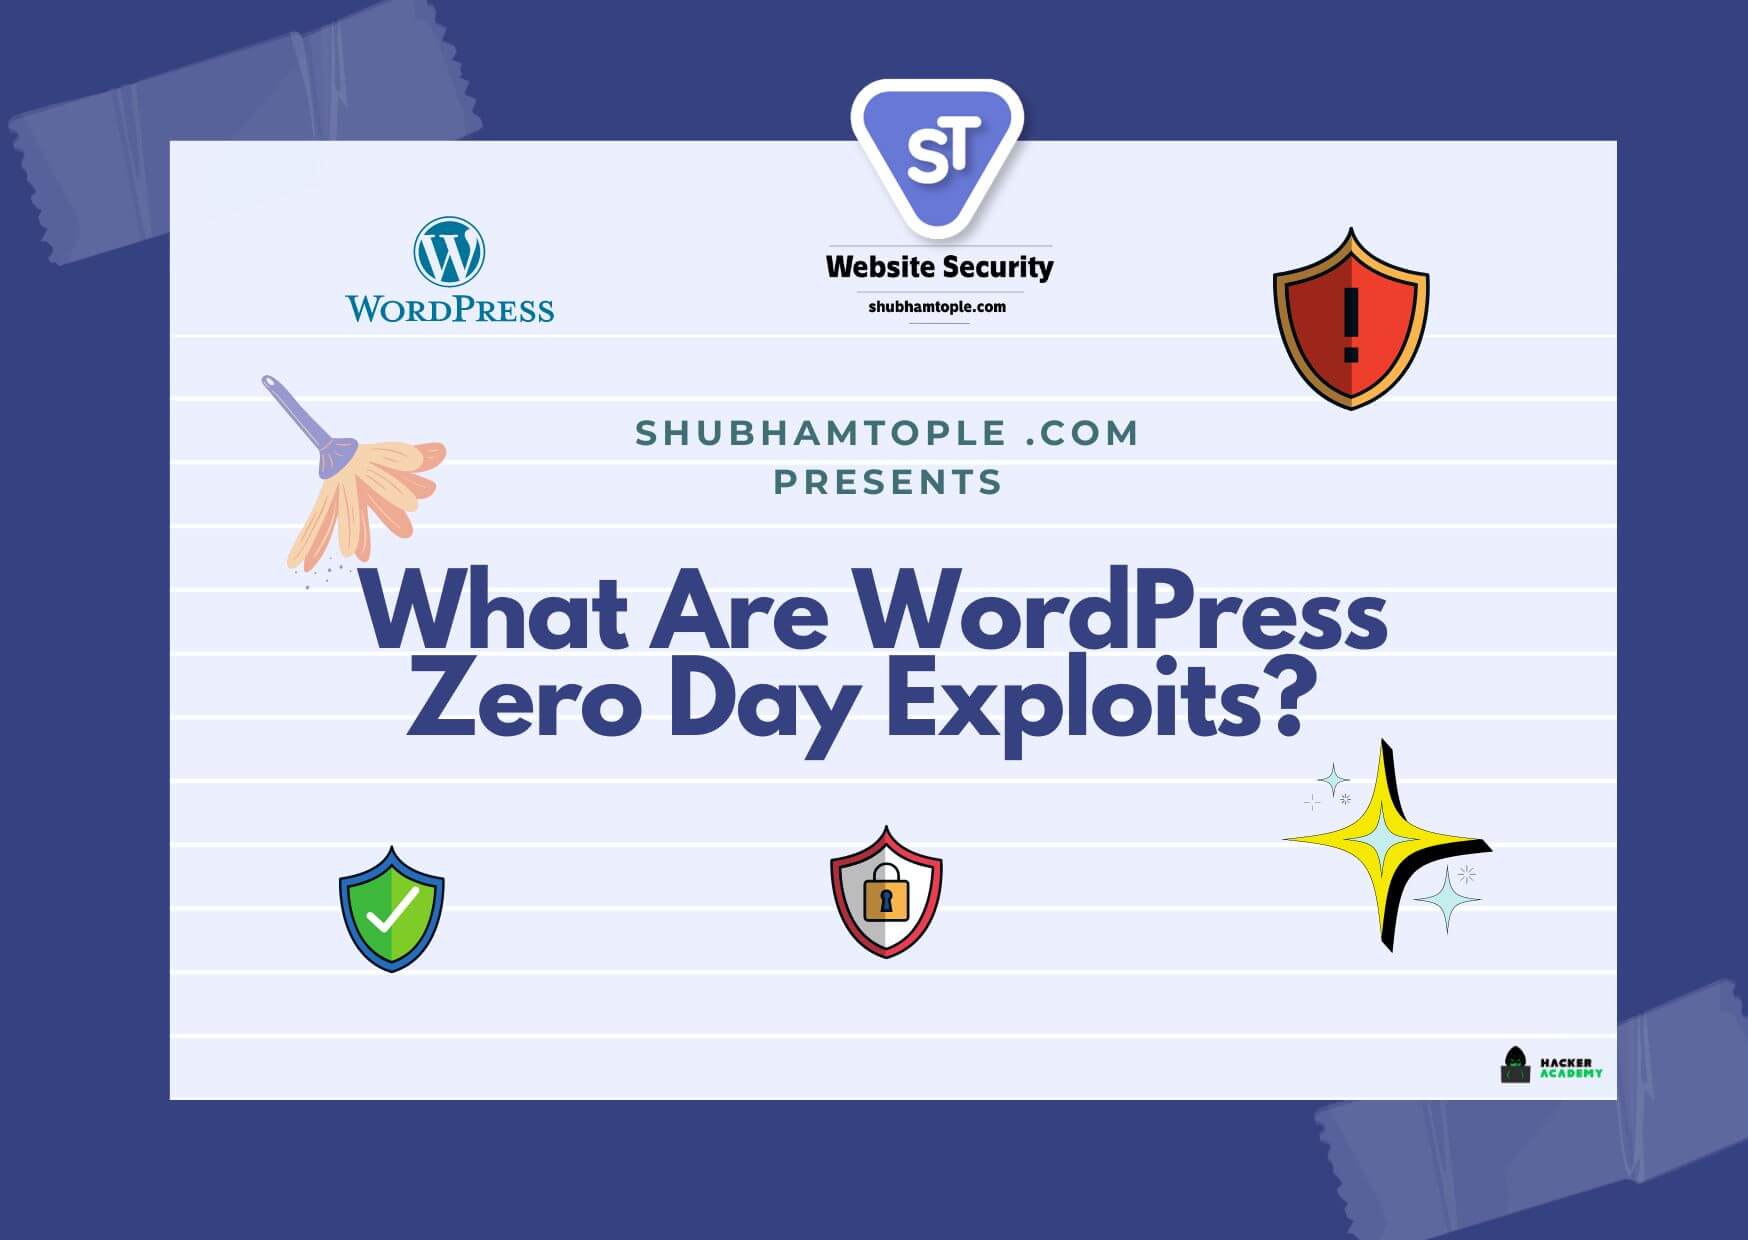 What Are WordPress Zero Day Exploits?